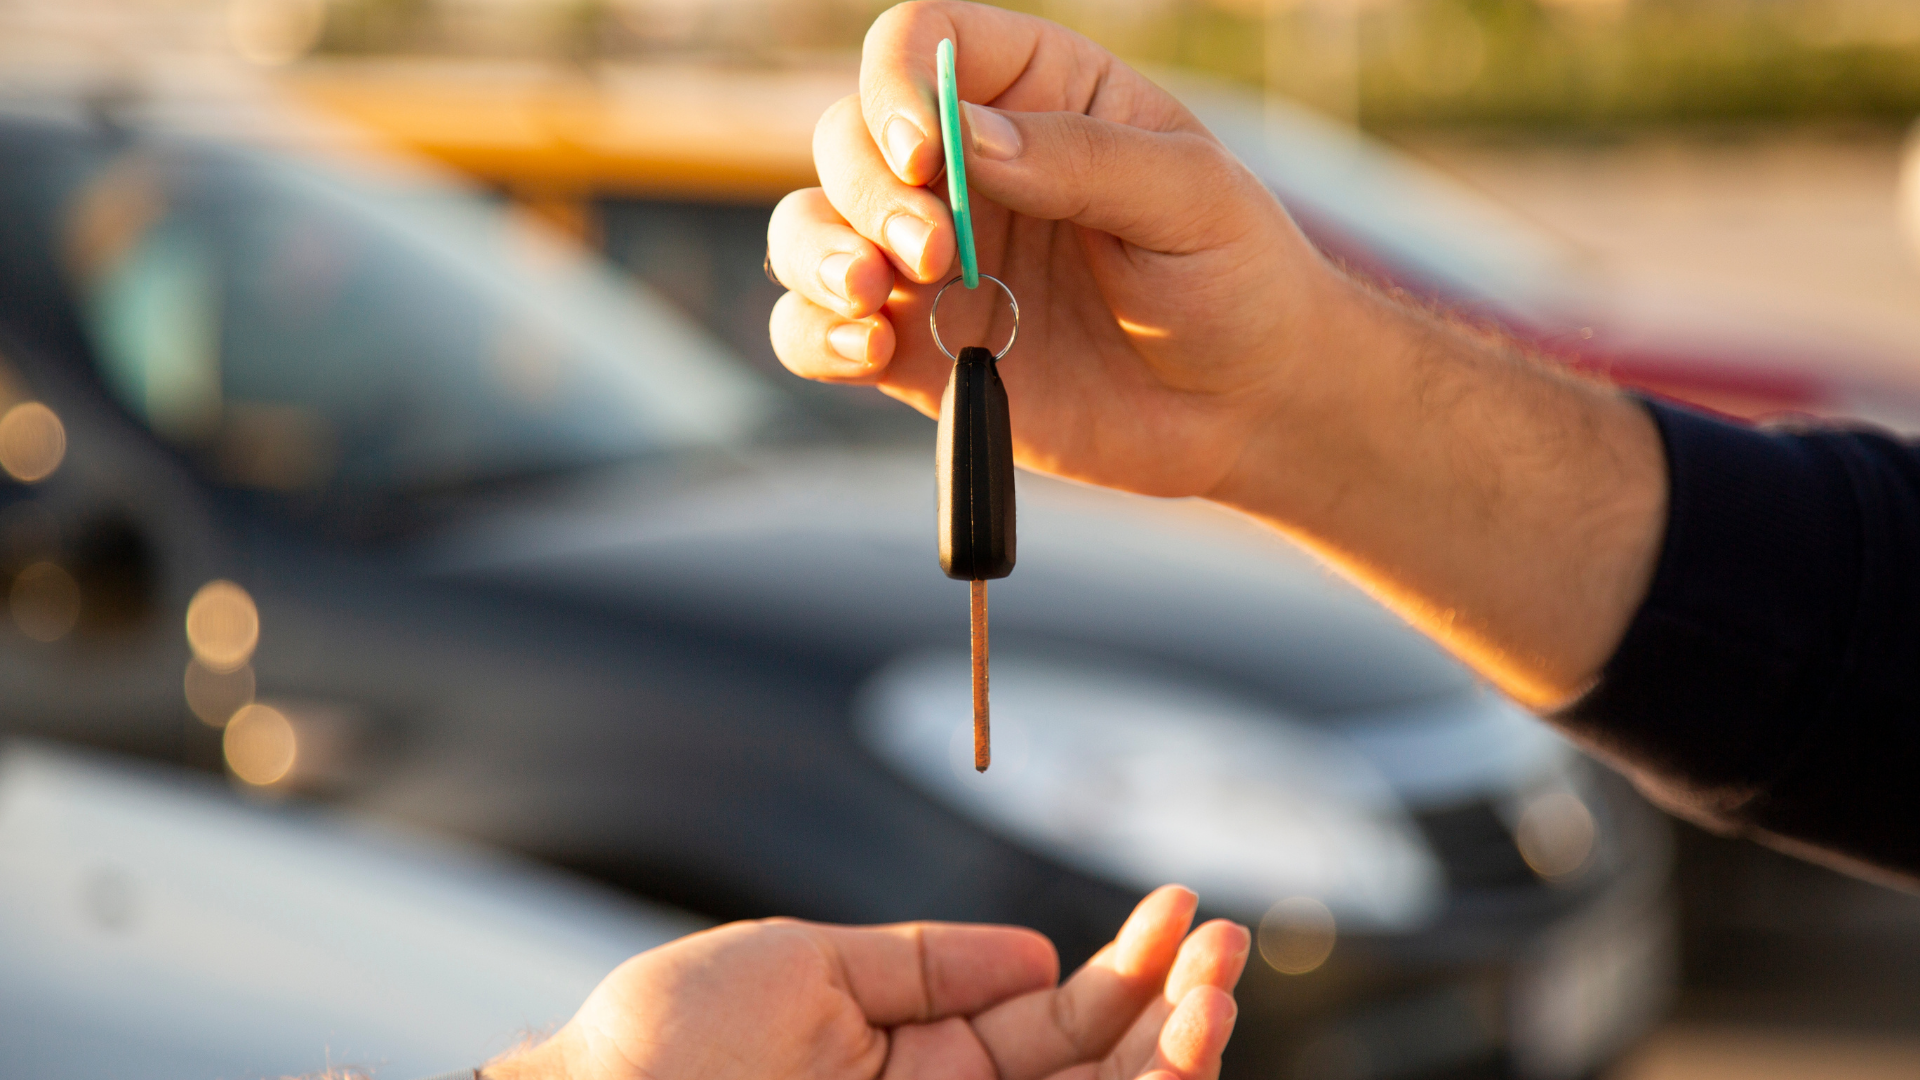 handing over car keys for a second hand car sale